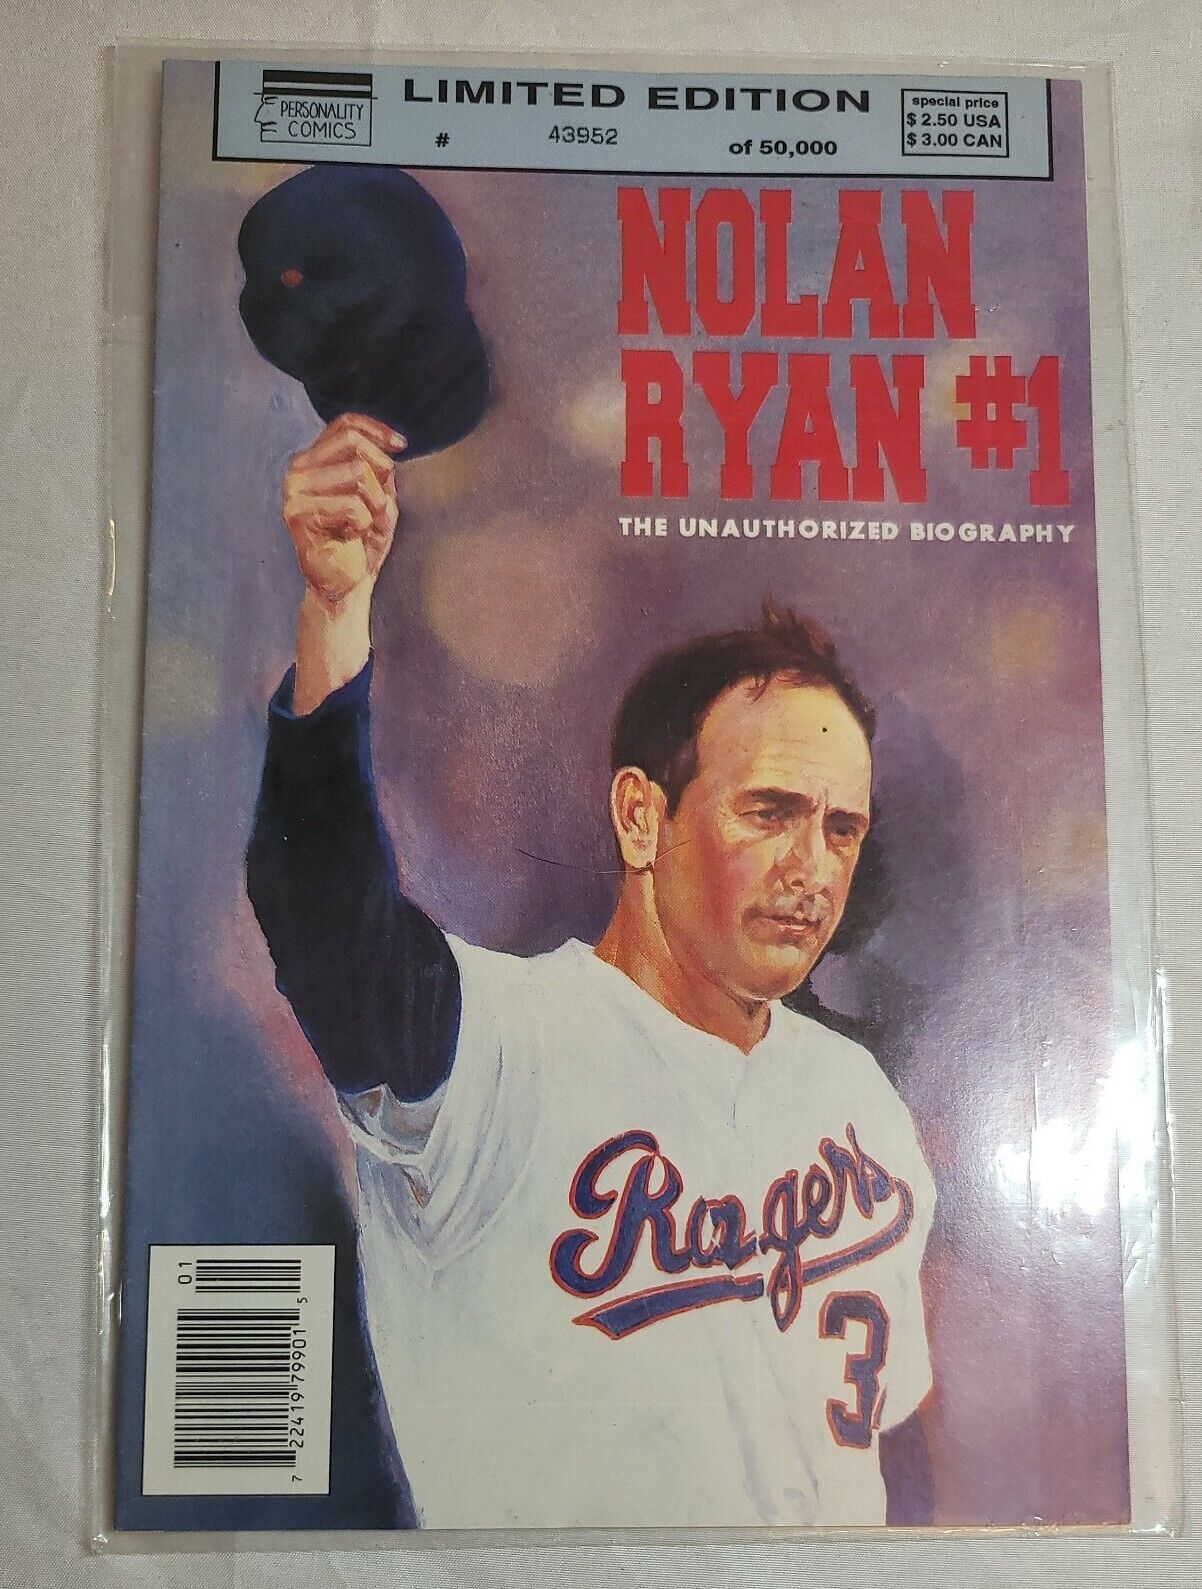 Nolan Ryan #1 - Personality Comics - Limited Edition (July 1992) 43952 Of 50,000